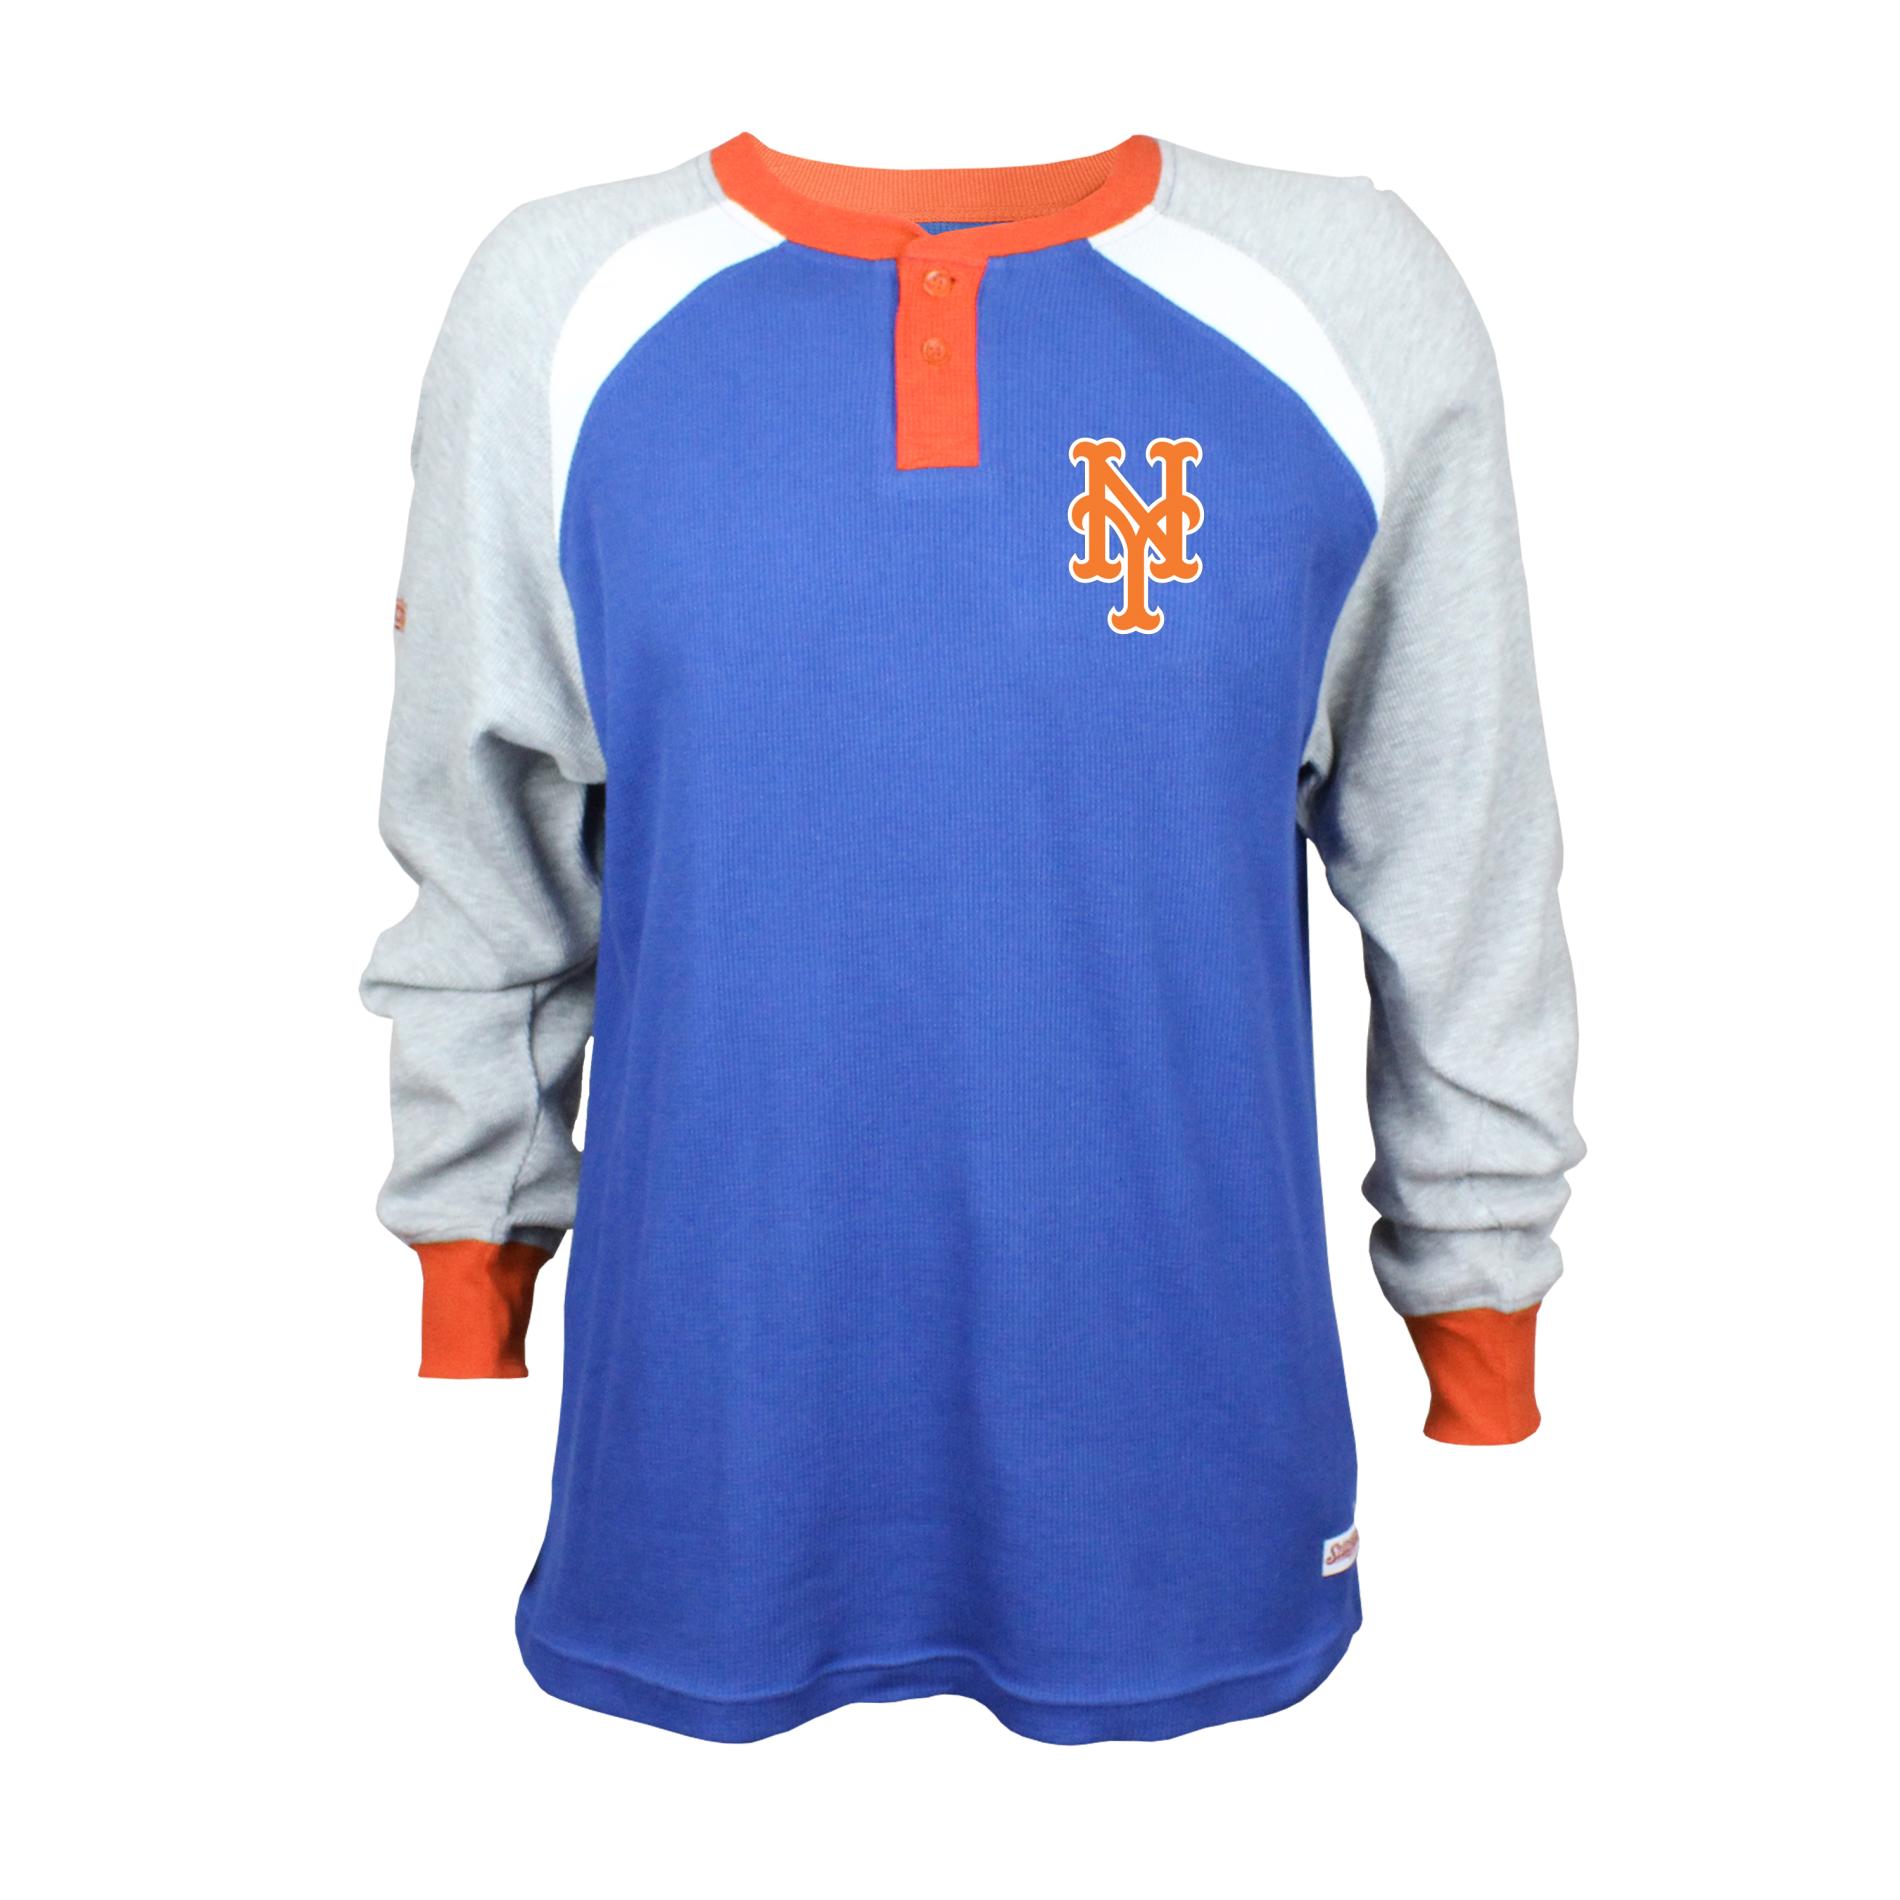 MLB Men's Thermal Henley Shirt - New York Mets